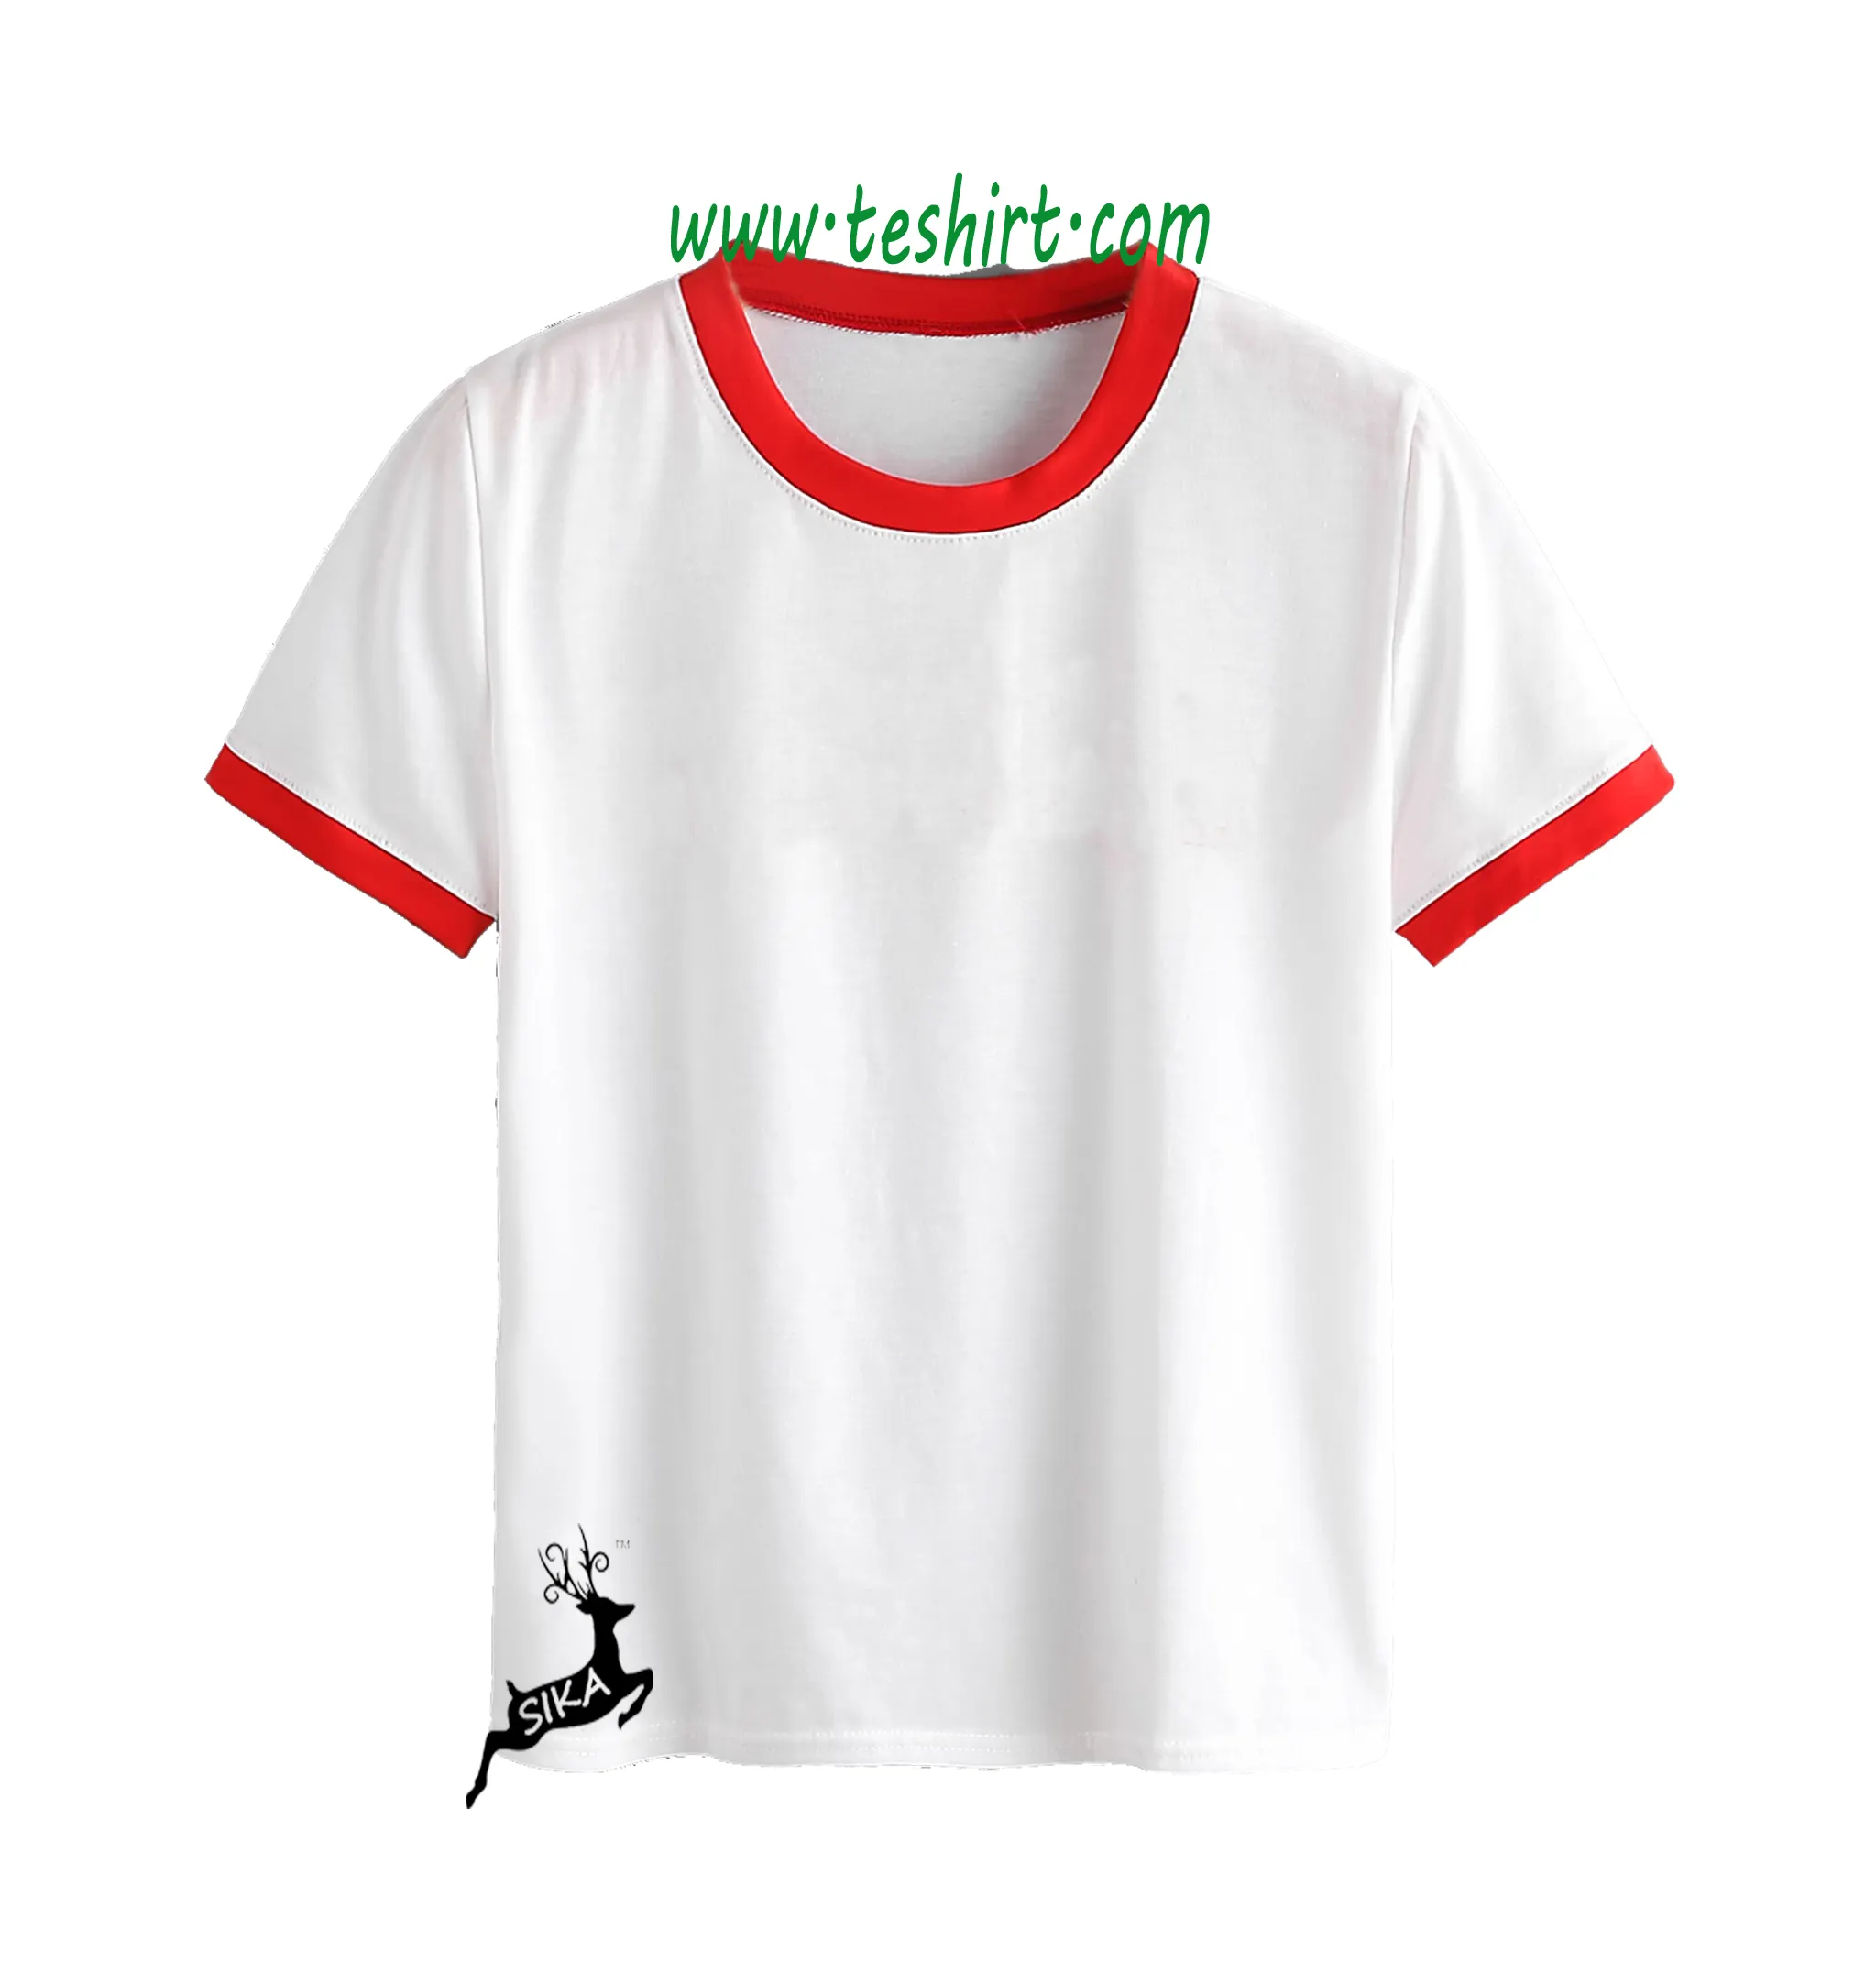 Oem t shirt di cotone stampa stile tubolare ringer t shirt a buon mercato o-neck tee shirt ringer t-shirt di moda